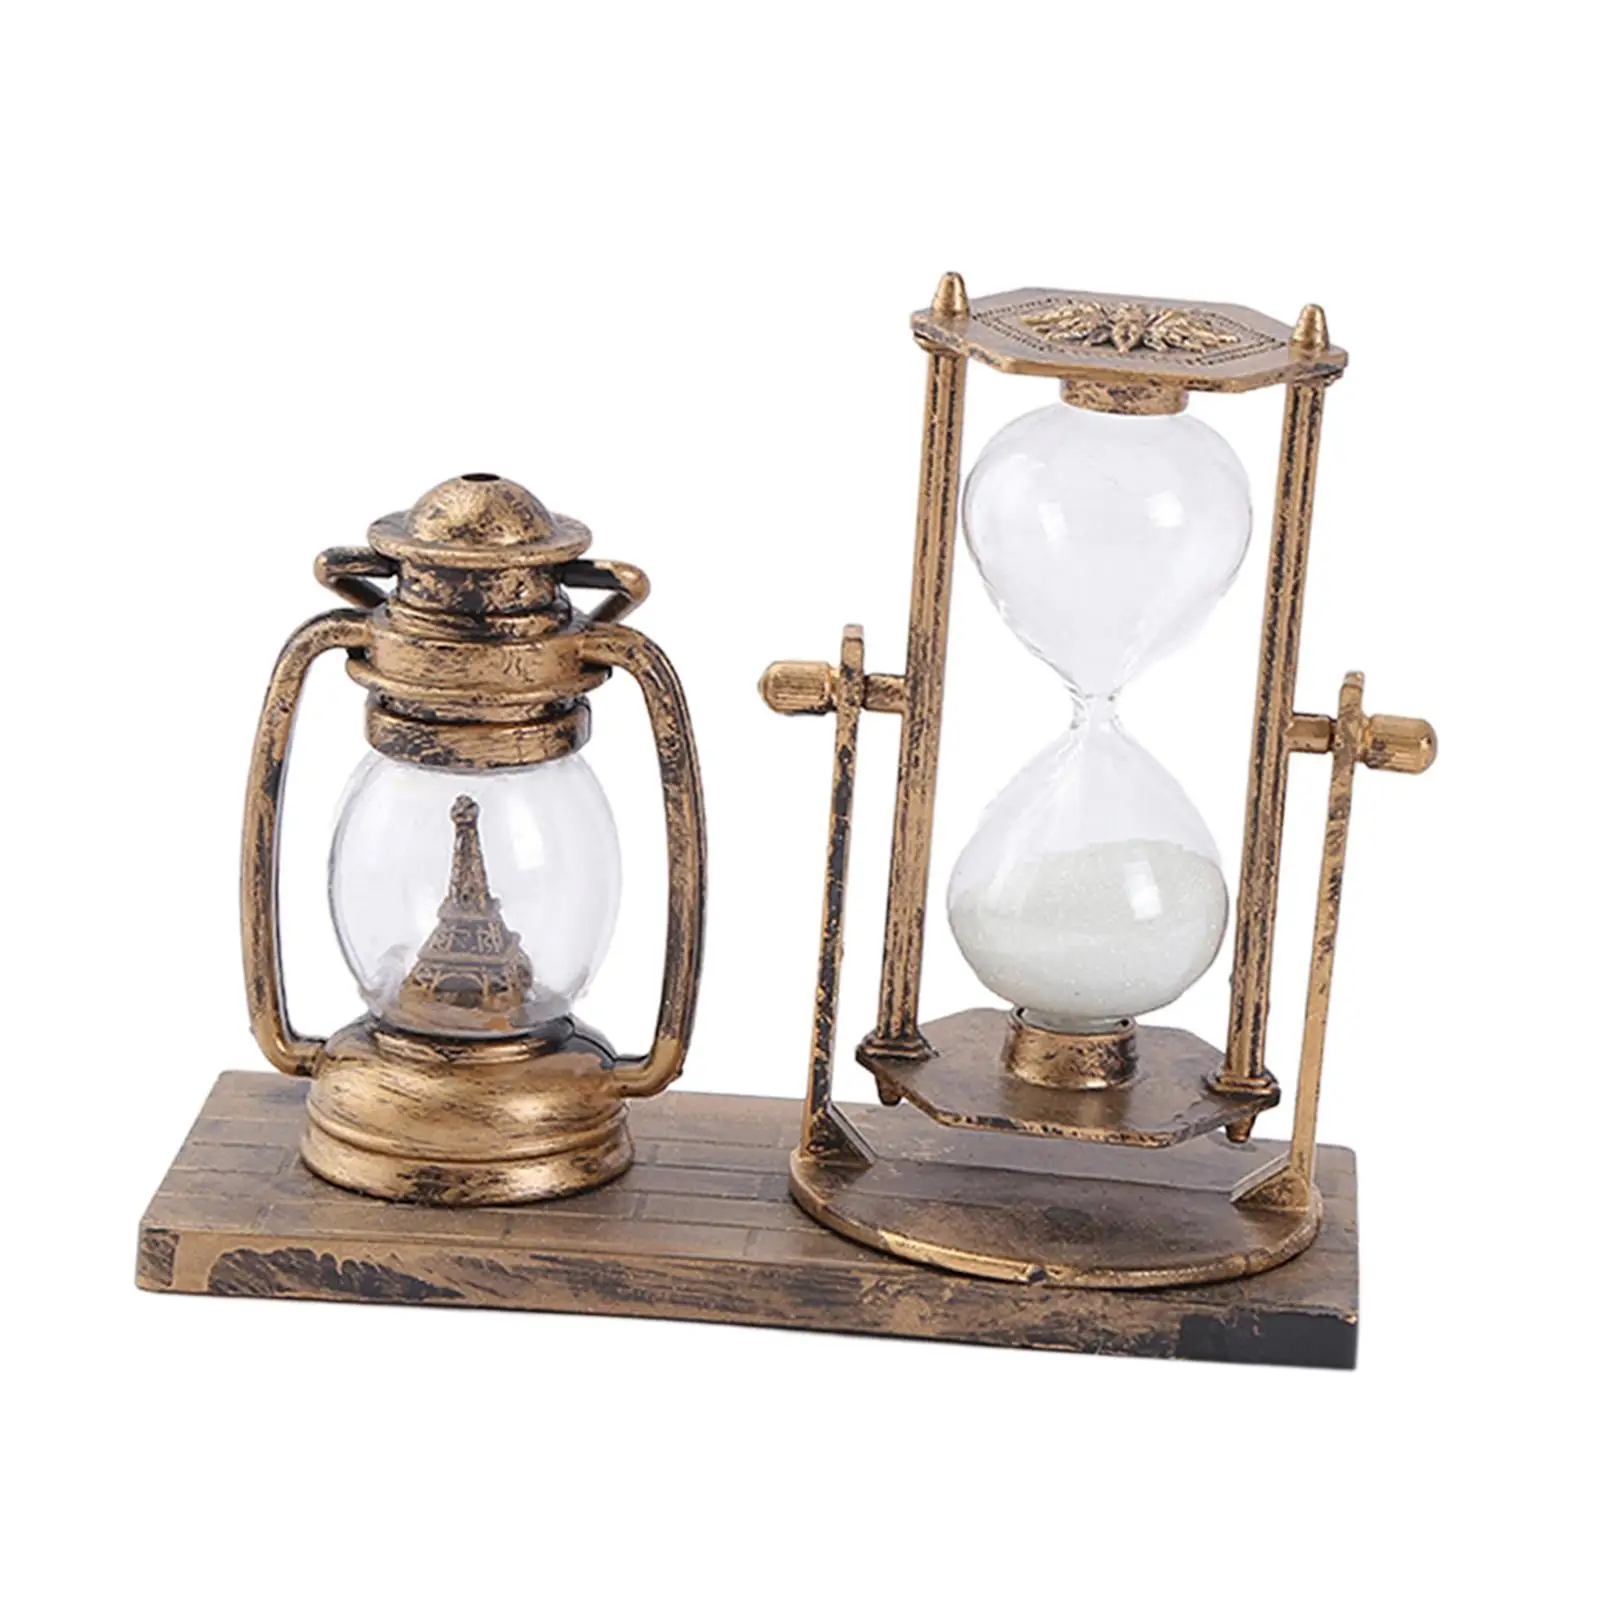 European Retro Style Lantern Hourglass Timer Decor Sandglass Table Centerpiece Creative for Desktop Office Kitchen Birthday Gift